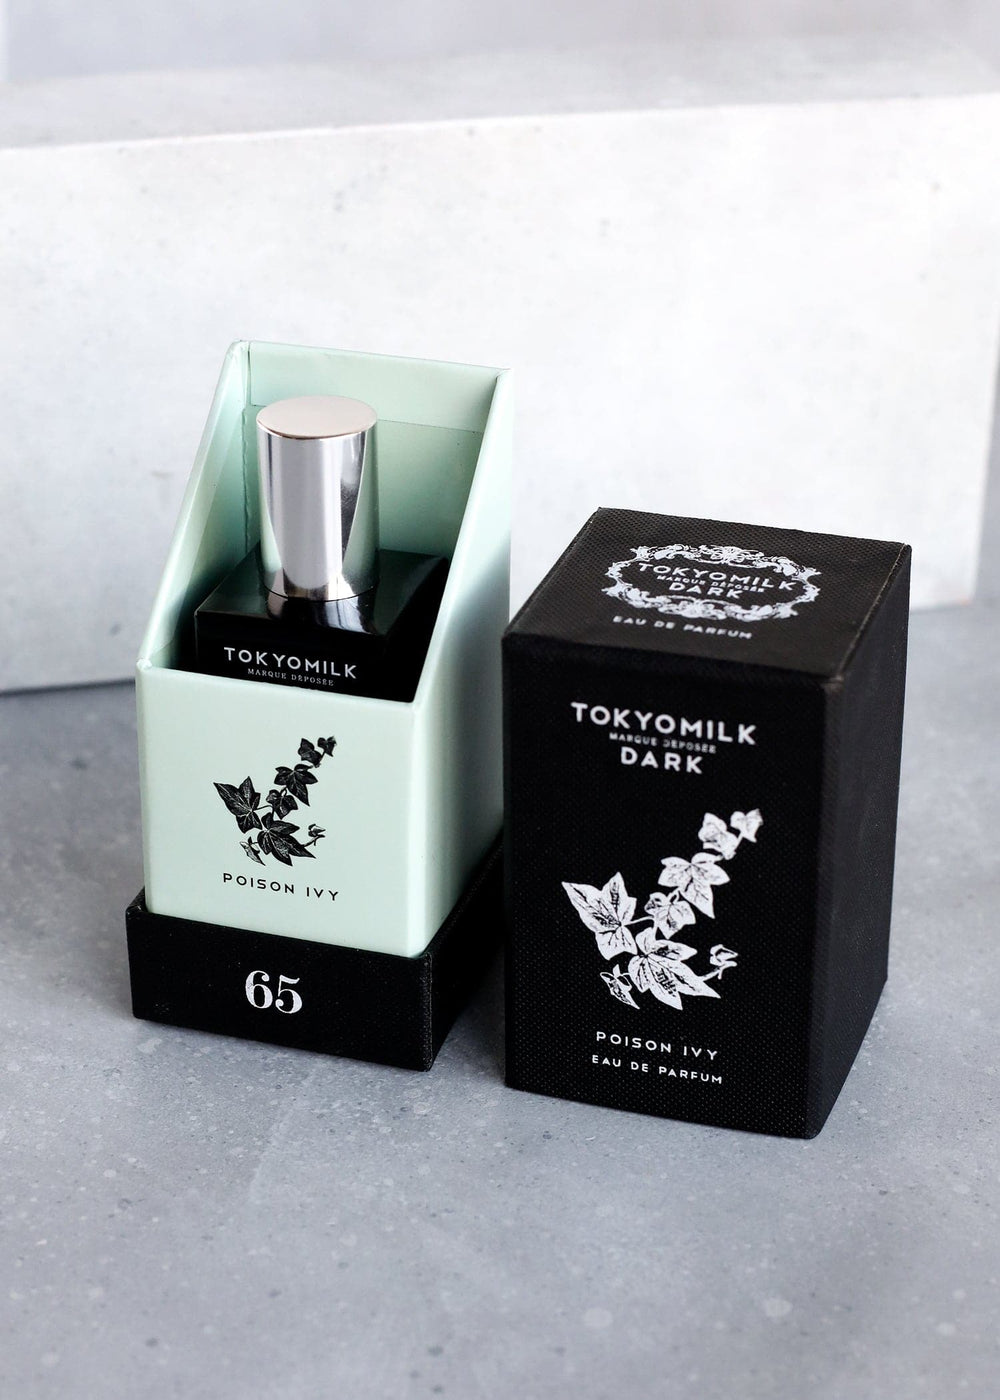 TokyoMilk Star Cross'd Parfum – Margot Elena